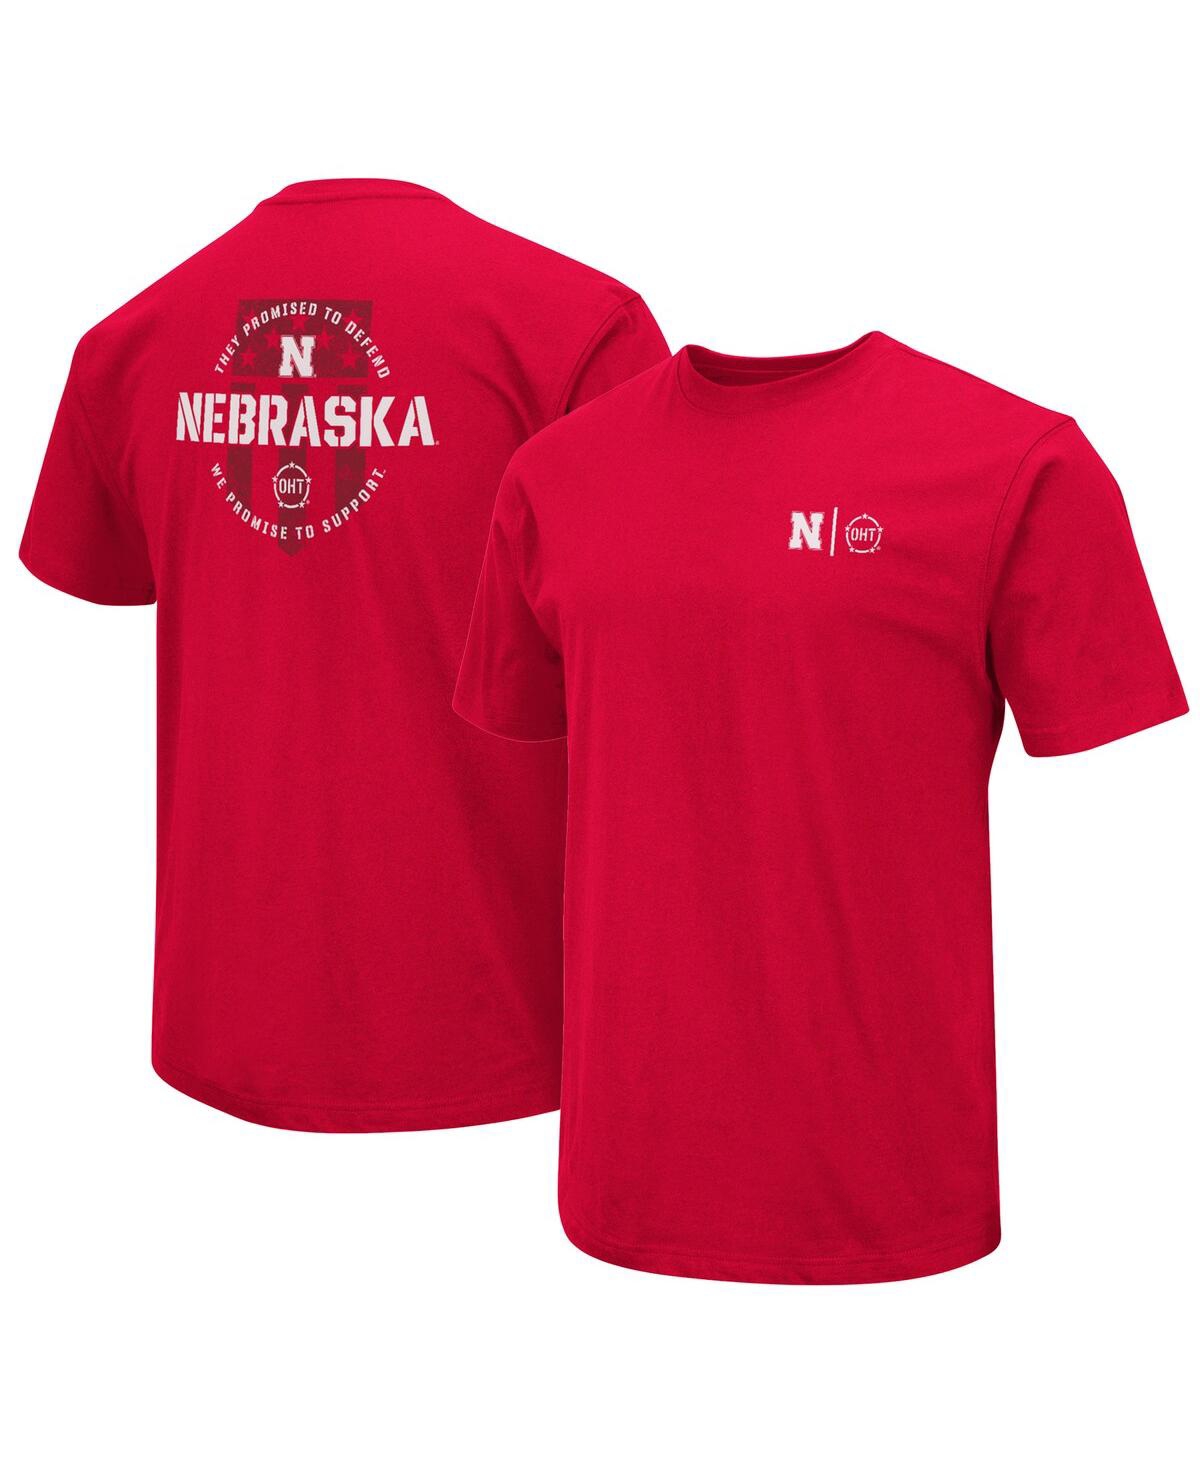 Men's Colosseum Scarlet Nebraska Huskers Oht Military-Inspired Appreciation T-shirt - Scarlet